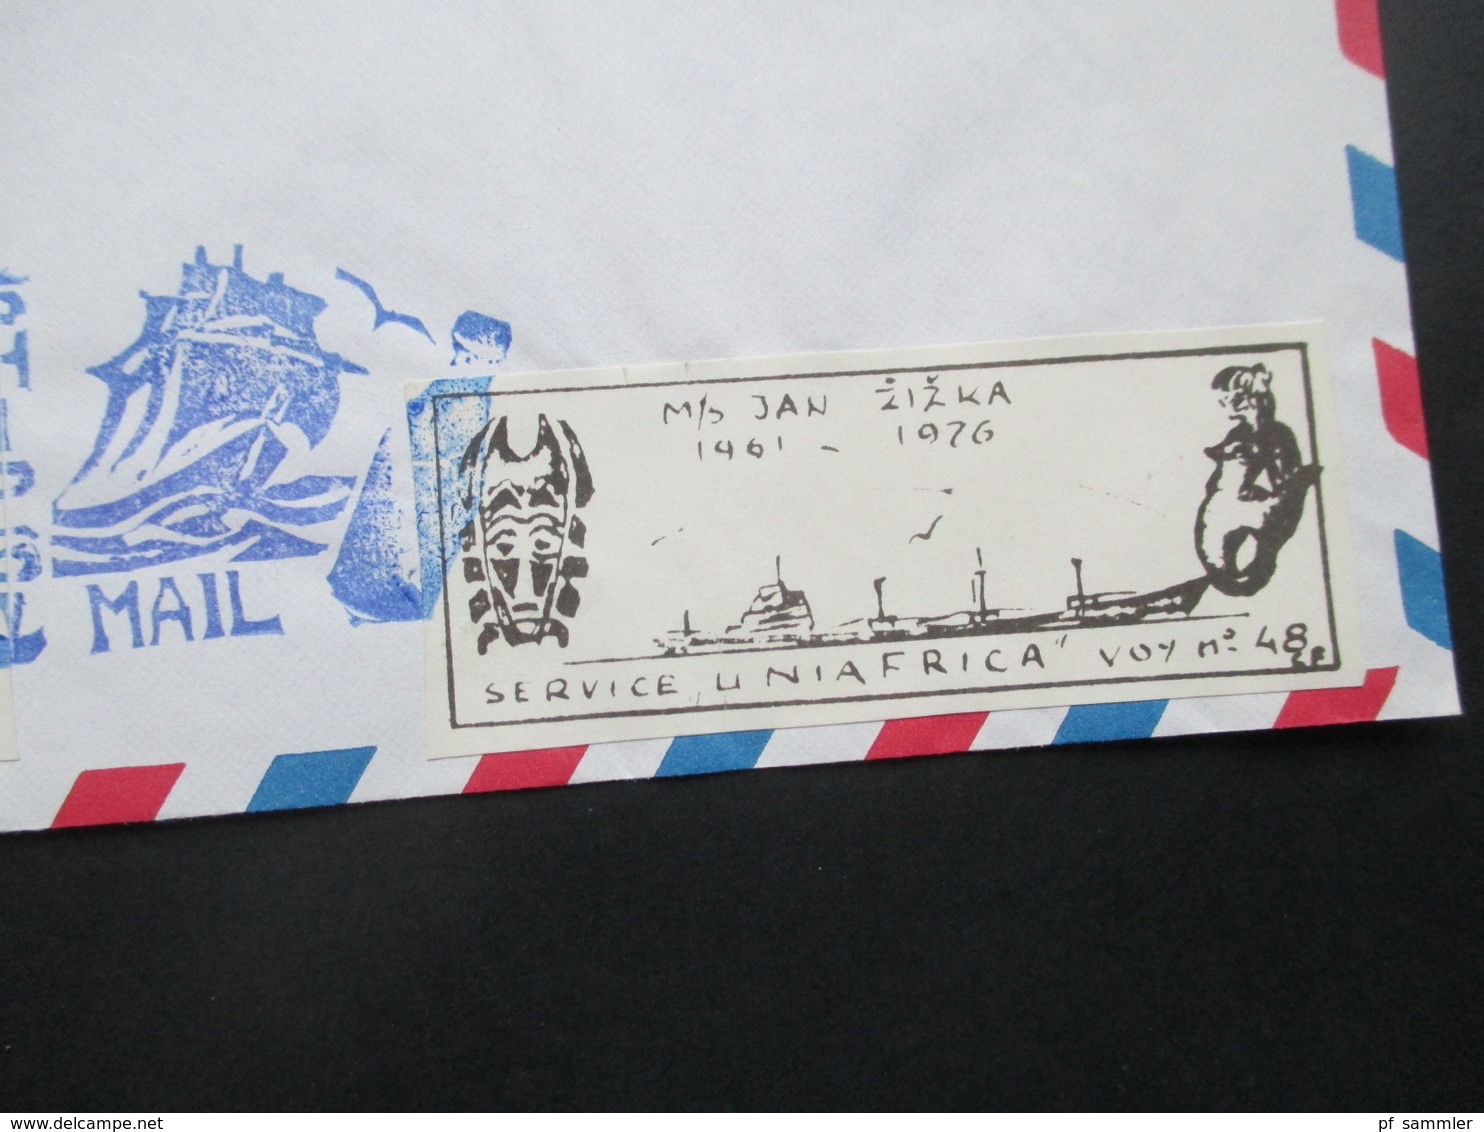 Afrika 1976 Ship Mail / Letter 2 Vignetten / Aufkleber MS Jan Zizka 1961 - 76 West Africa Line Voyage 1948 - Barcos